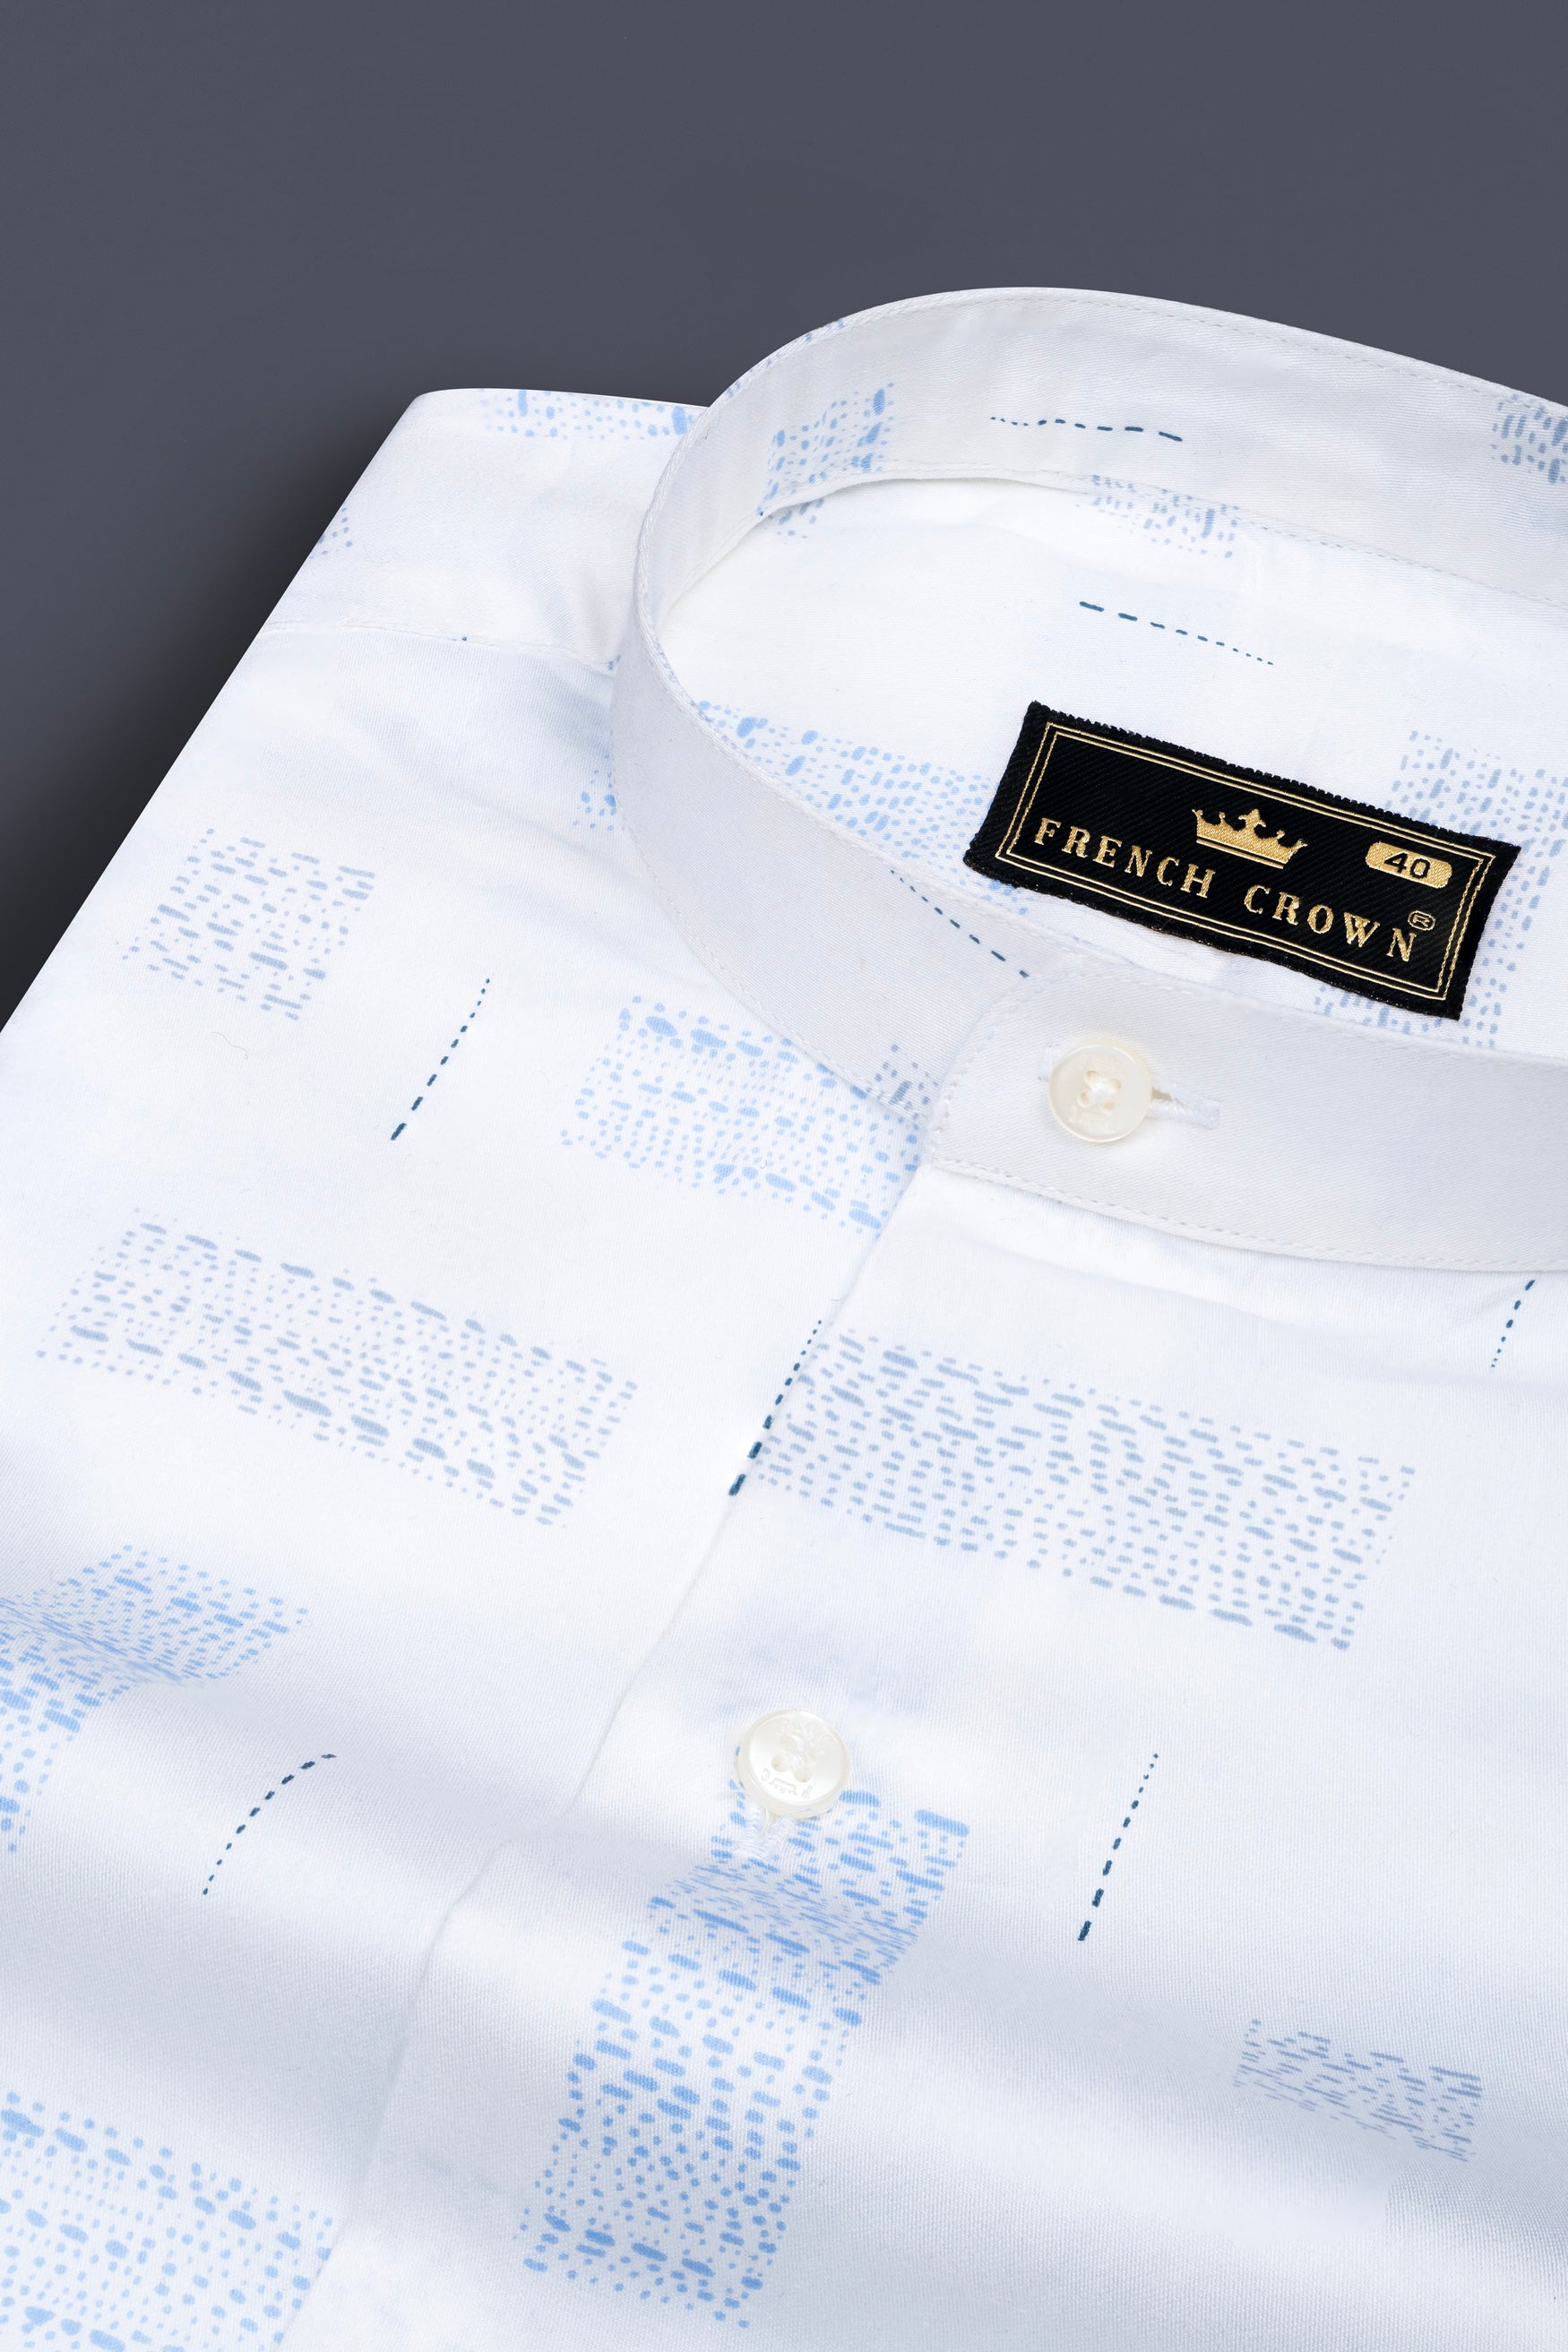 Bright White with Polo Blue Textured Subtle Sheen Super Soft Premium Cotton Shirt